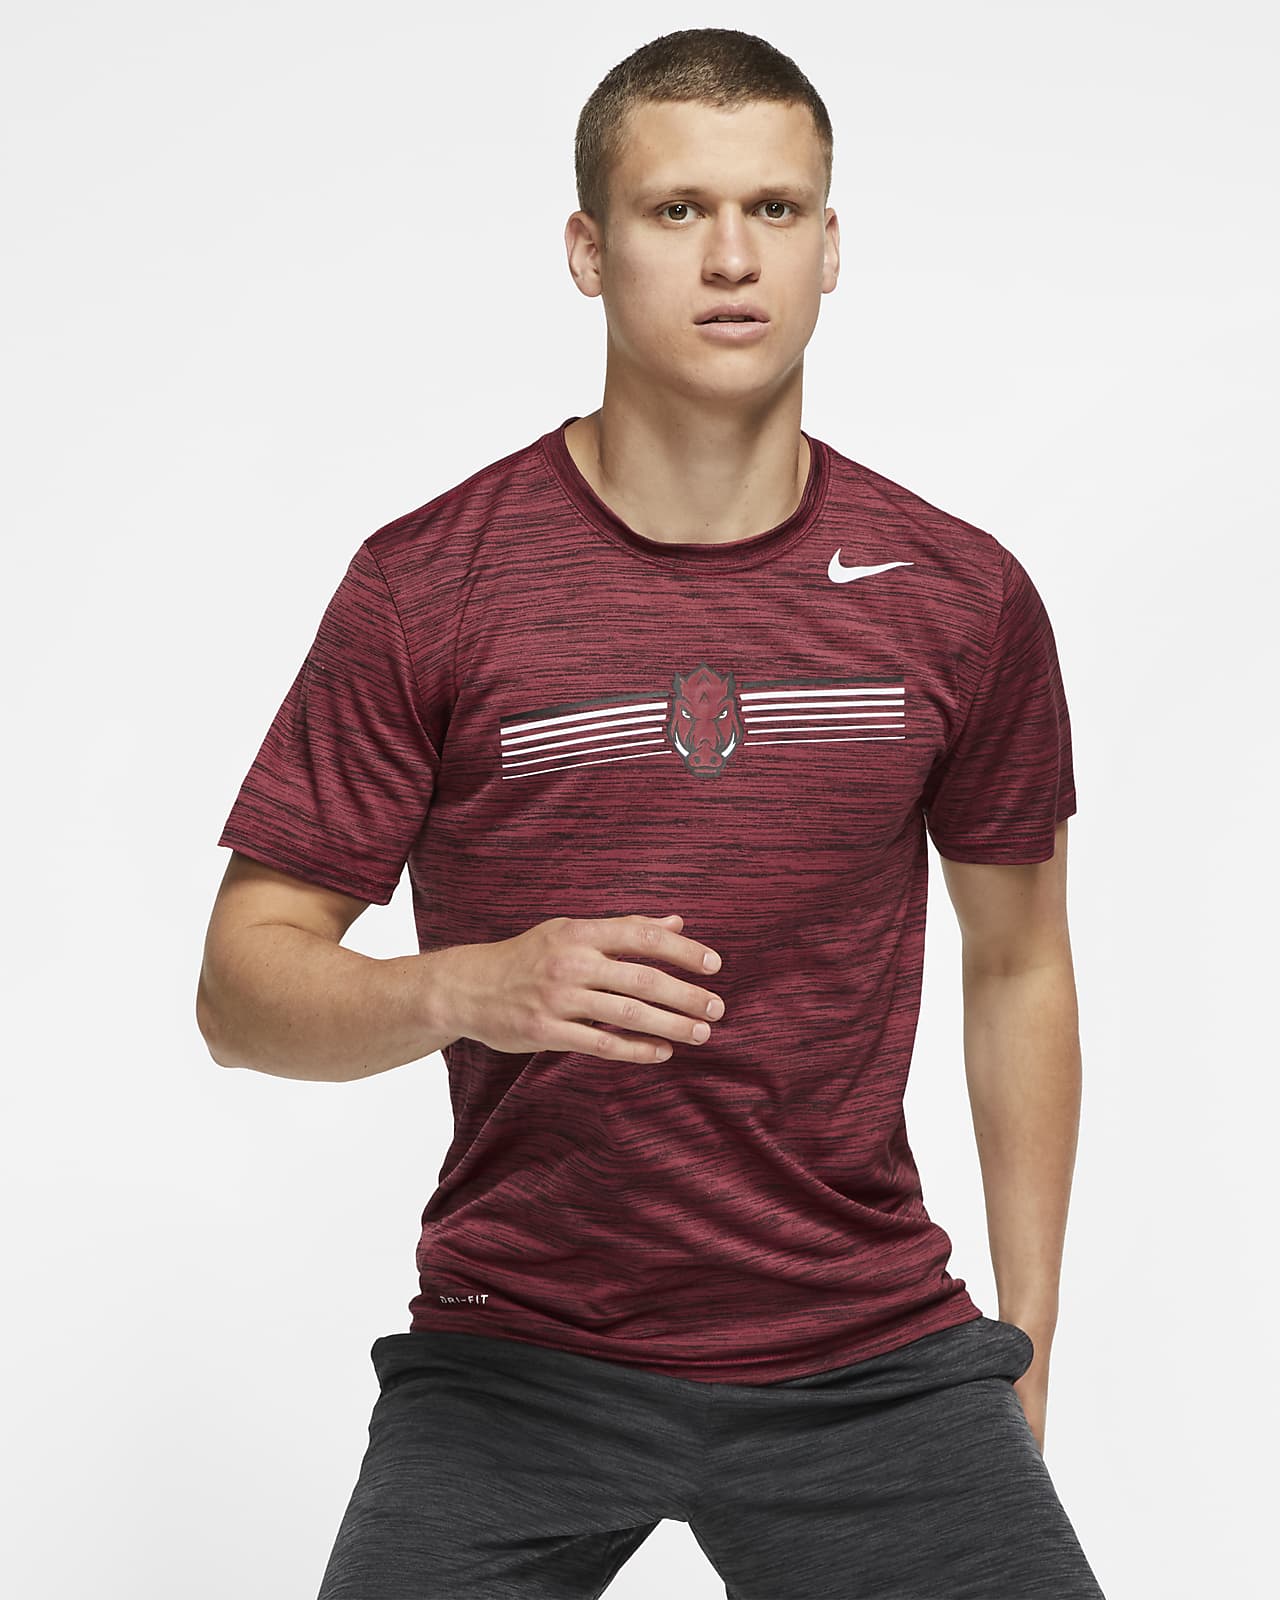 Nike College Basketball Logo (Arkansas) Men's T-Shirt